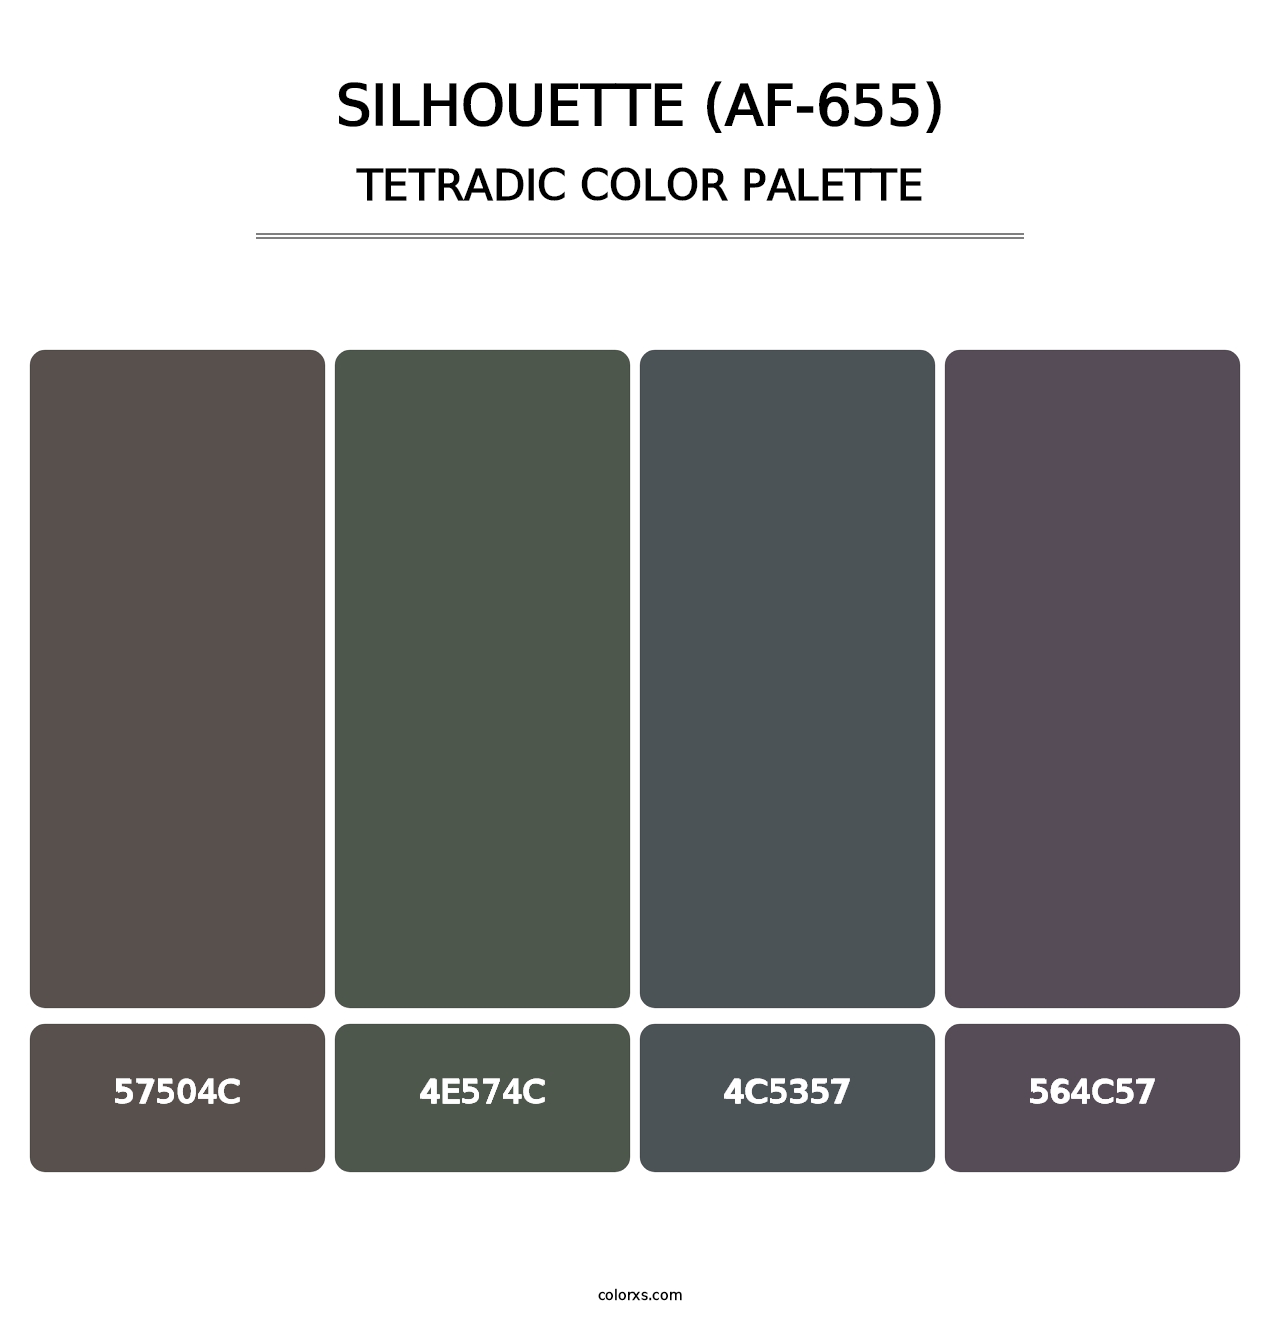 Silhouette (AF-655) - Tetradic Color Palette